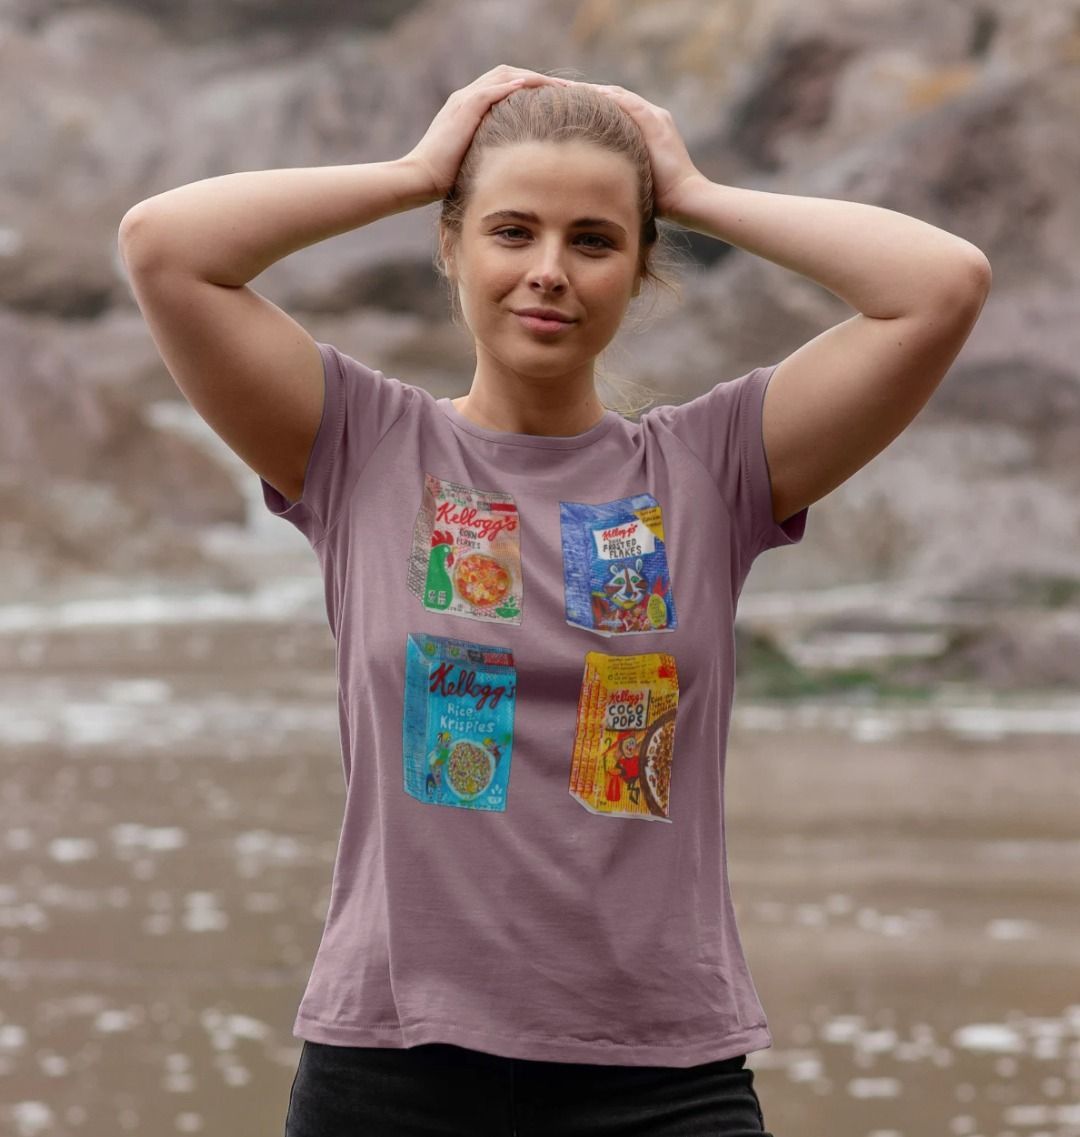 breakfast buddies organic women's tee - Printed T-shirt - Sarah Millin